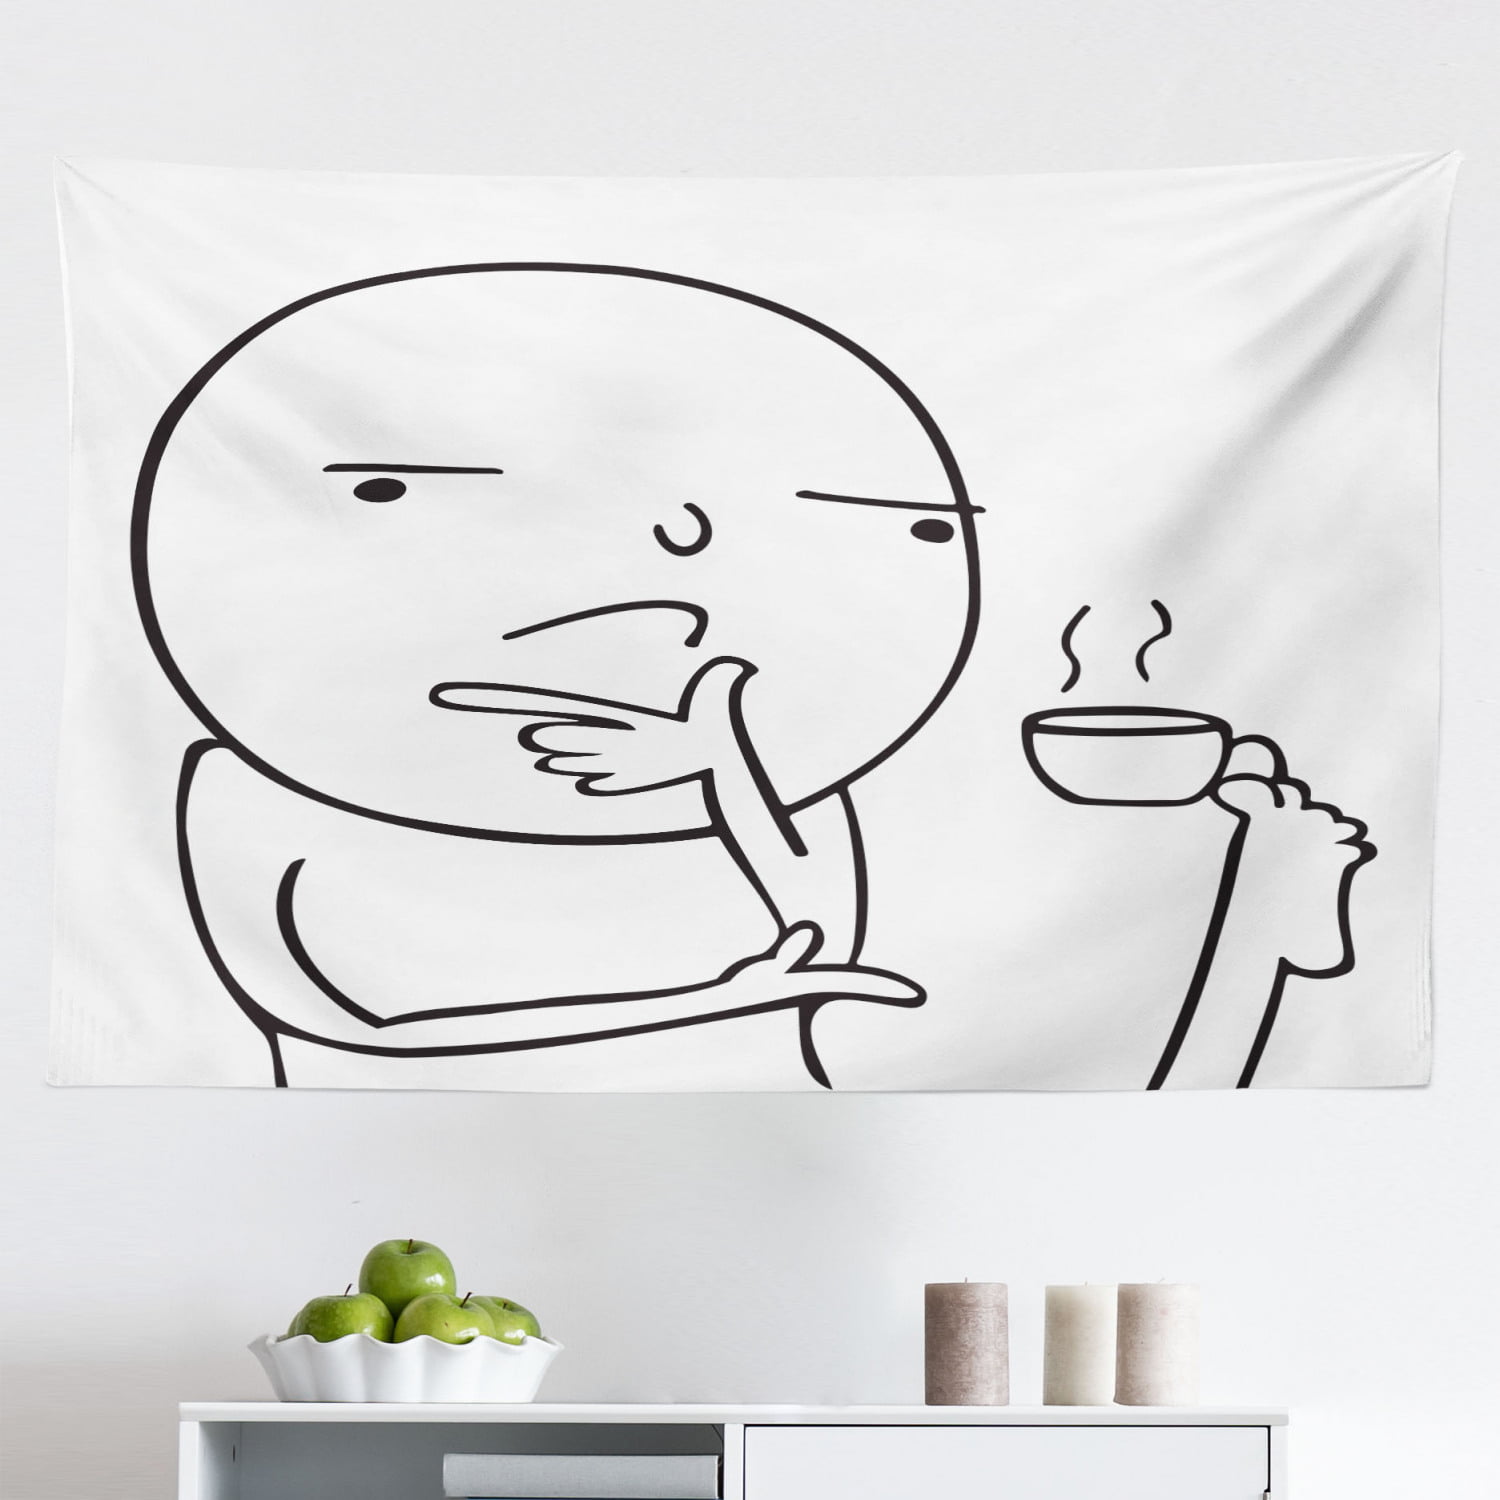 Humor Tapestry, Cartoon Style Troll Face Guy for Annoying Popular Internet  Meme Design, Fabric Wall Hanging Decor for Bedroom Living Room Dorm, 2